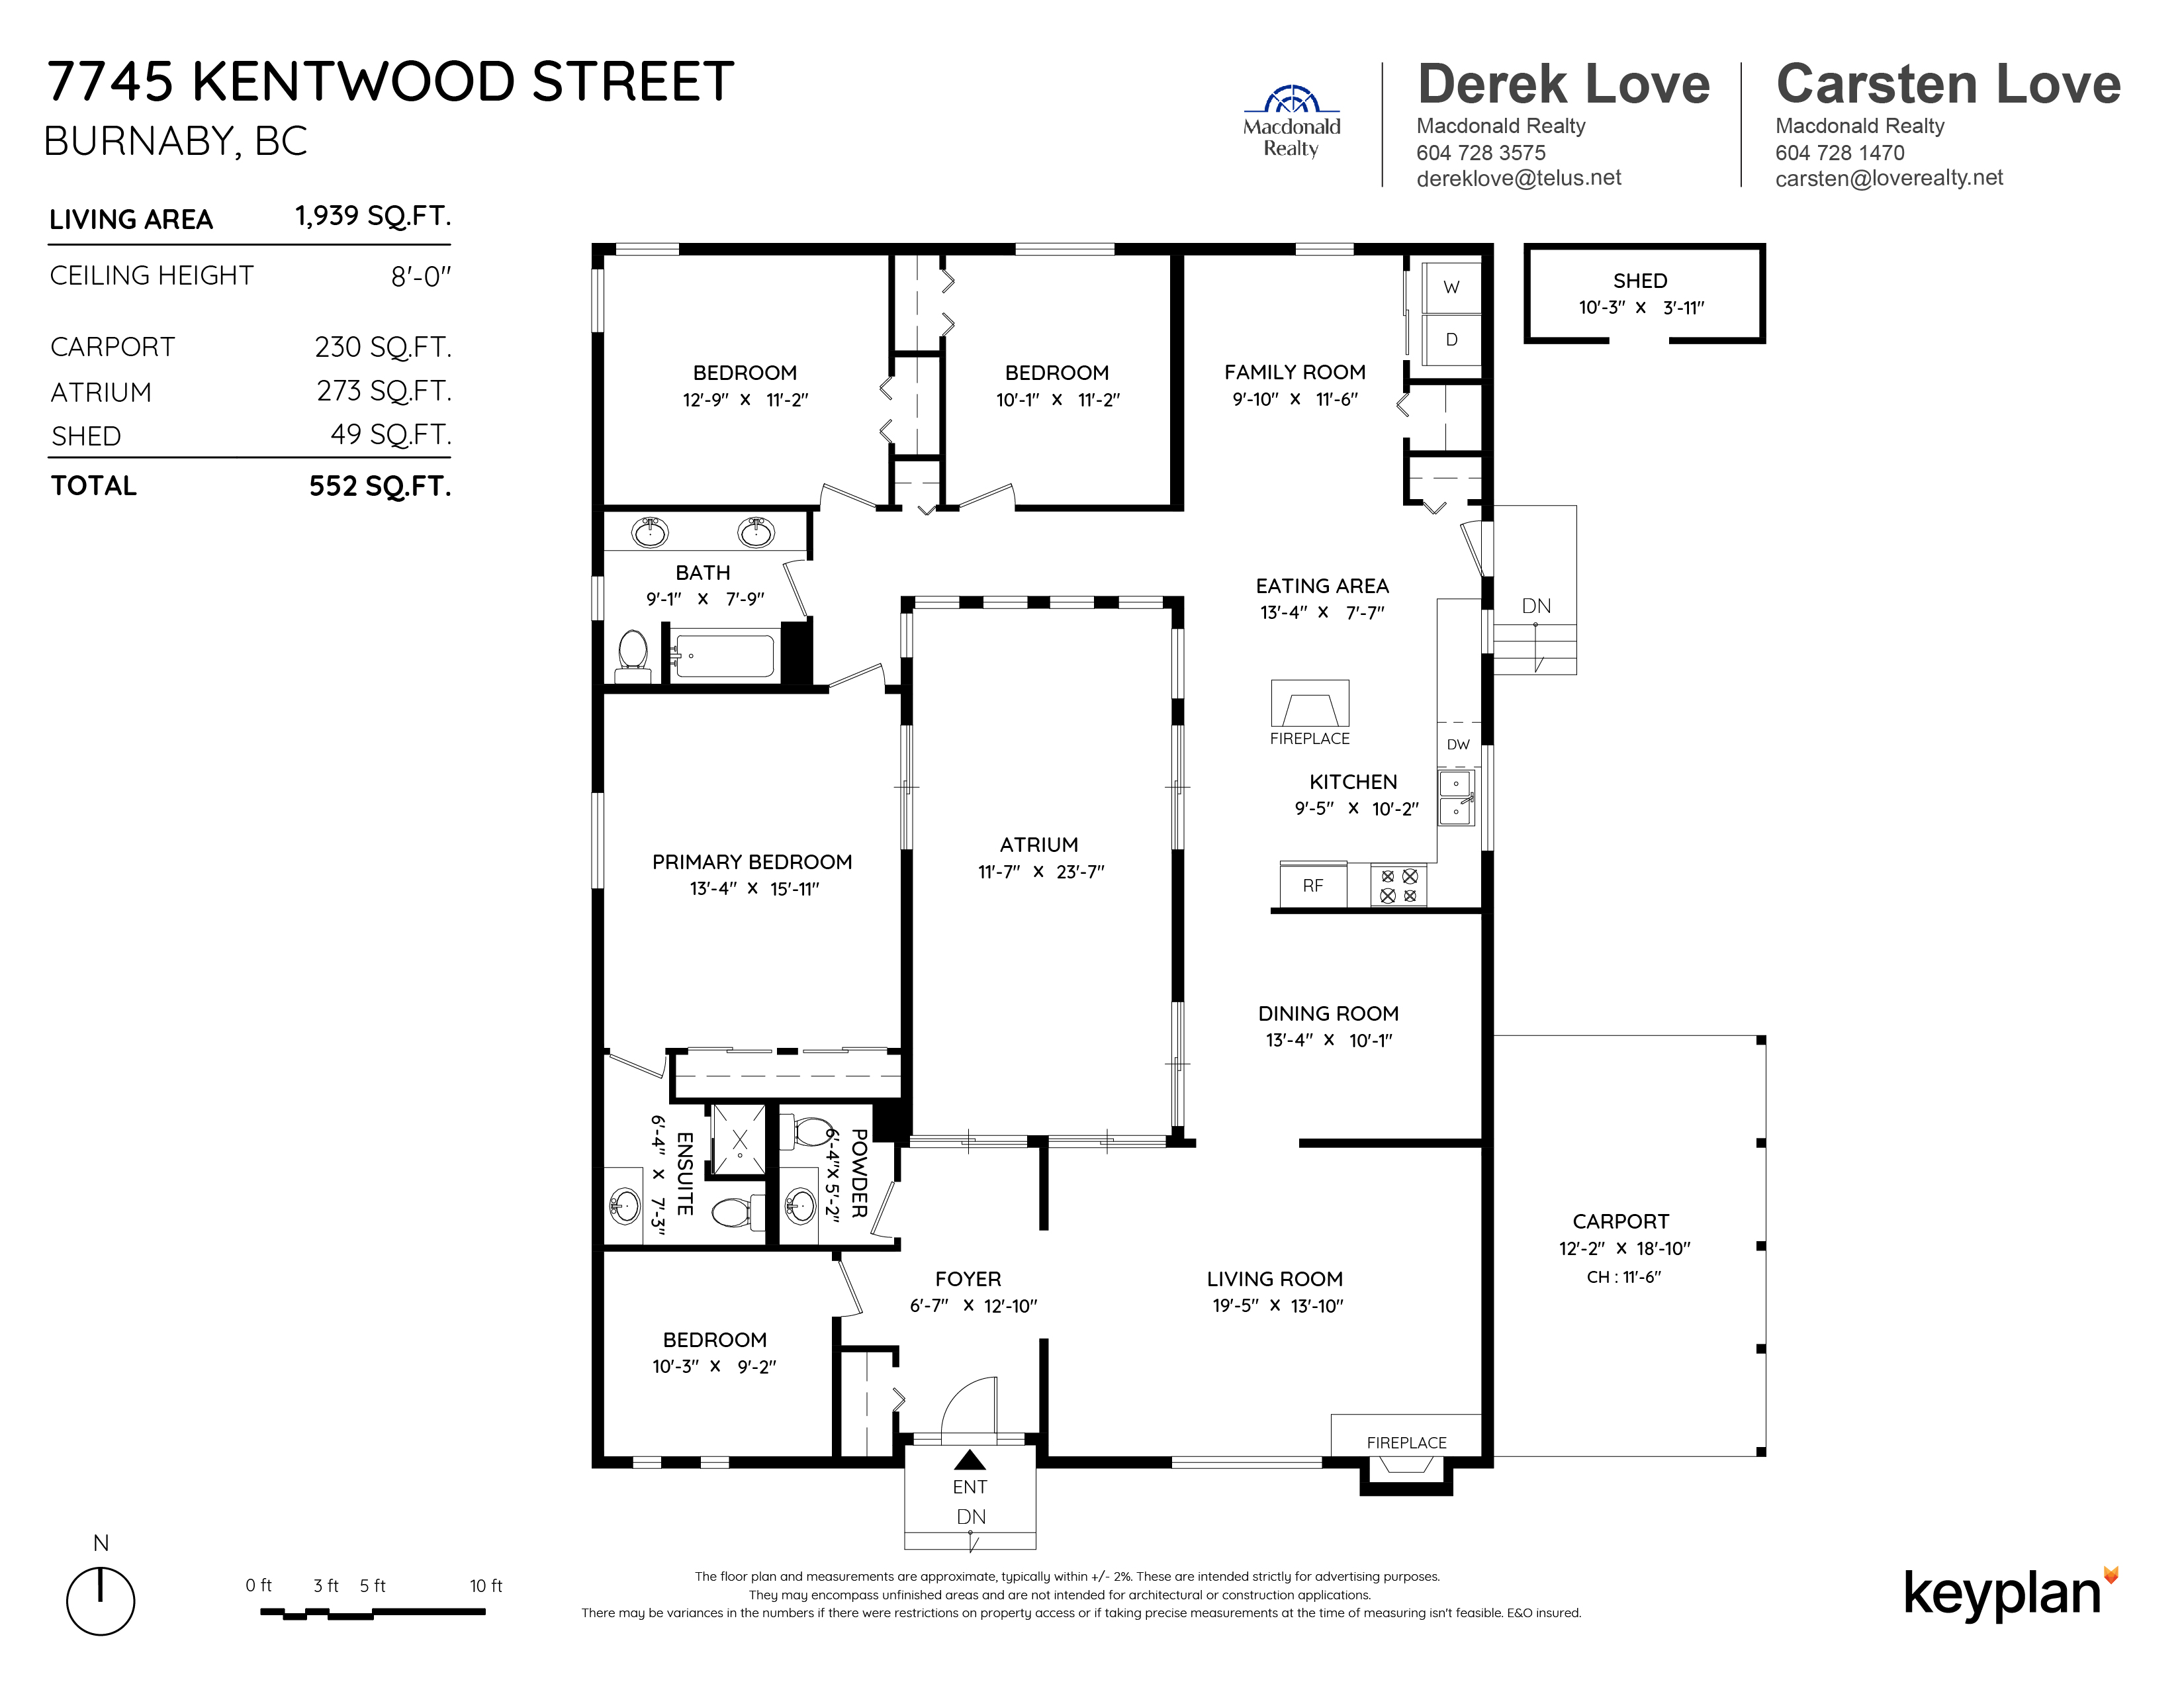 Derek & Carsten Love - 7745 Kentwood Street, Burnaby, BC, Canada | Floor Plan 1